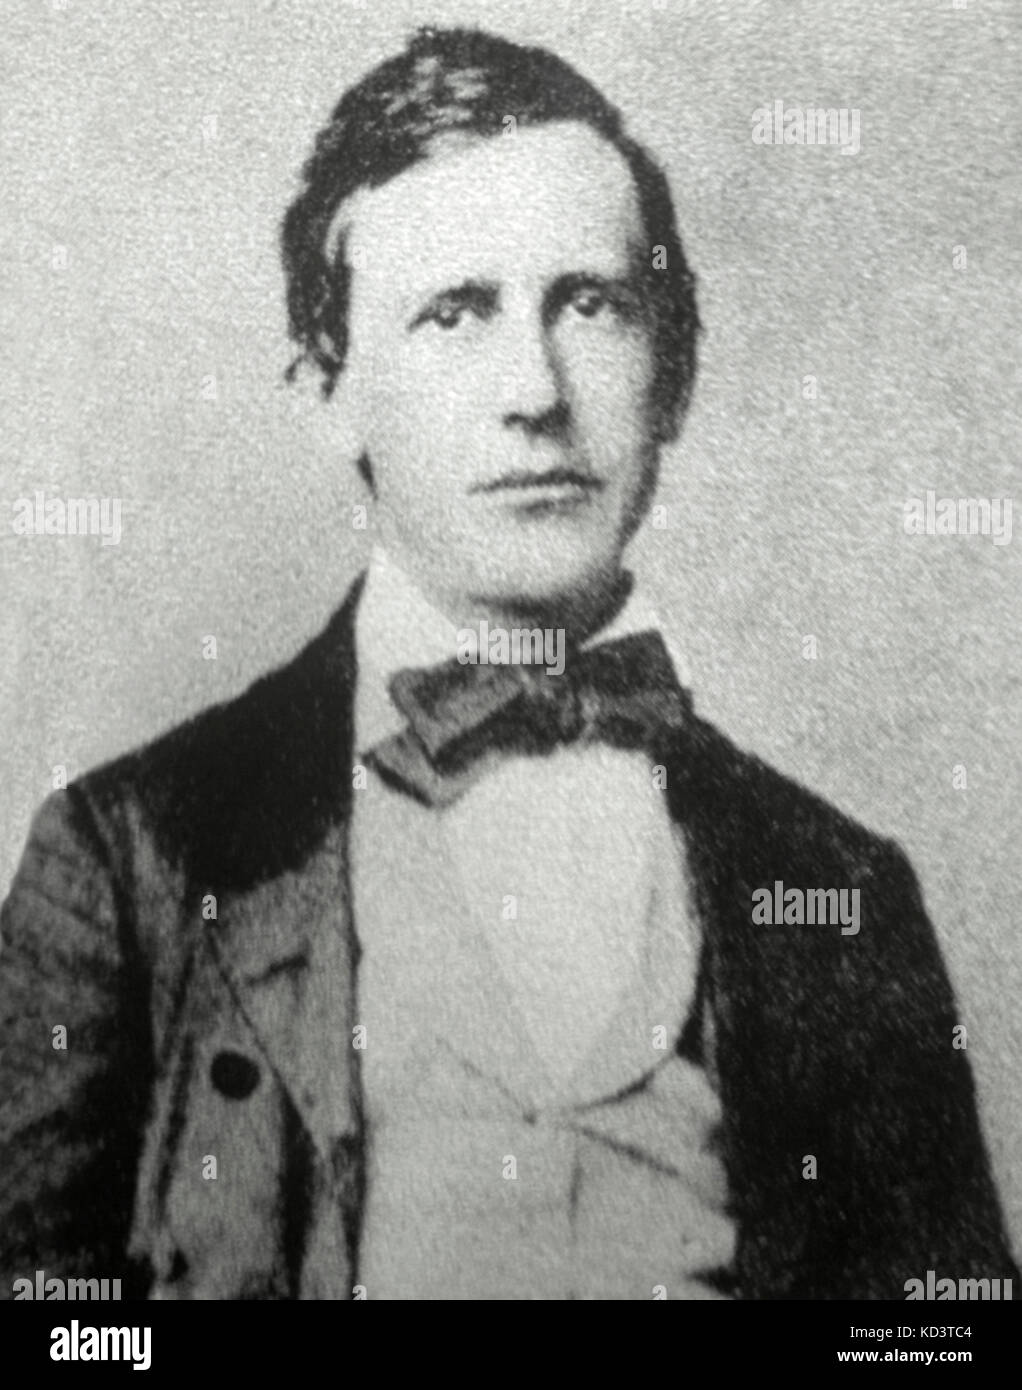 FOSTER, Stephen - portrait American Composer, 1826-1864 Stock Photo